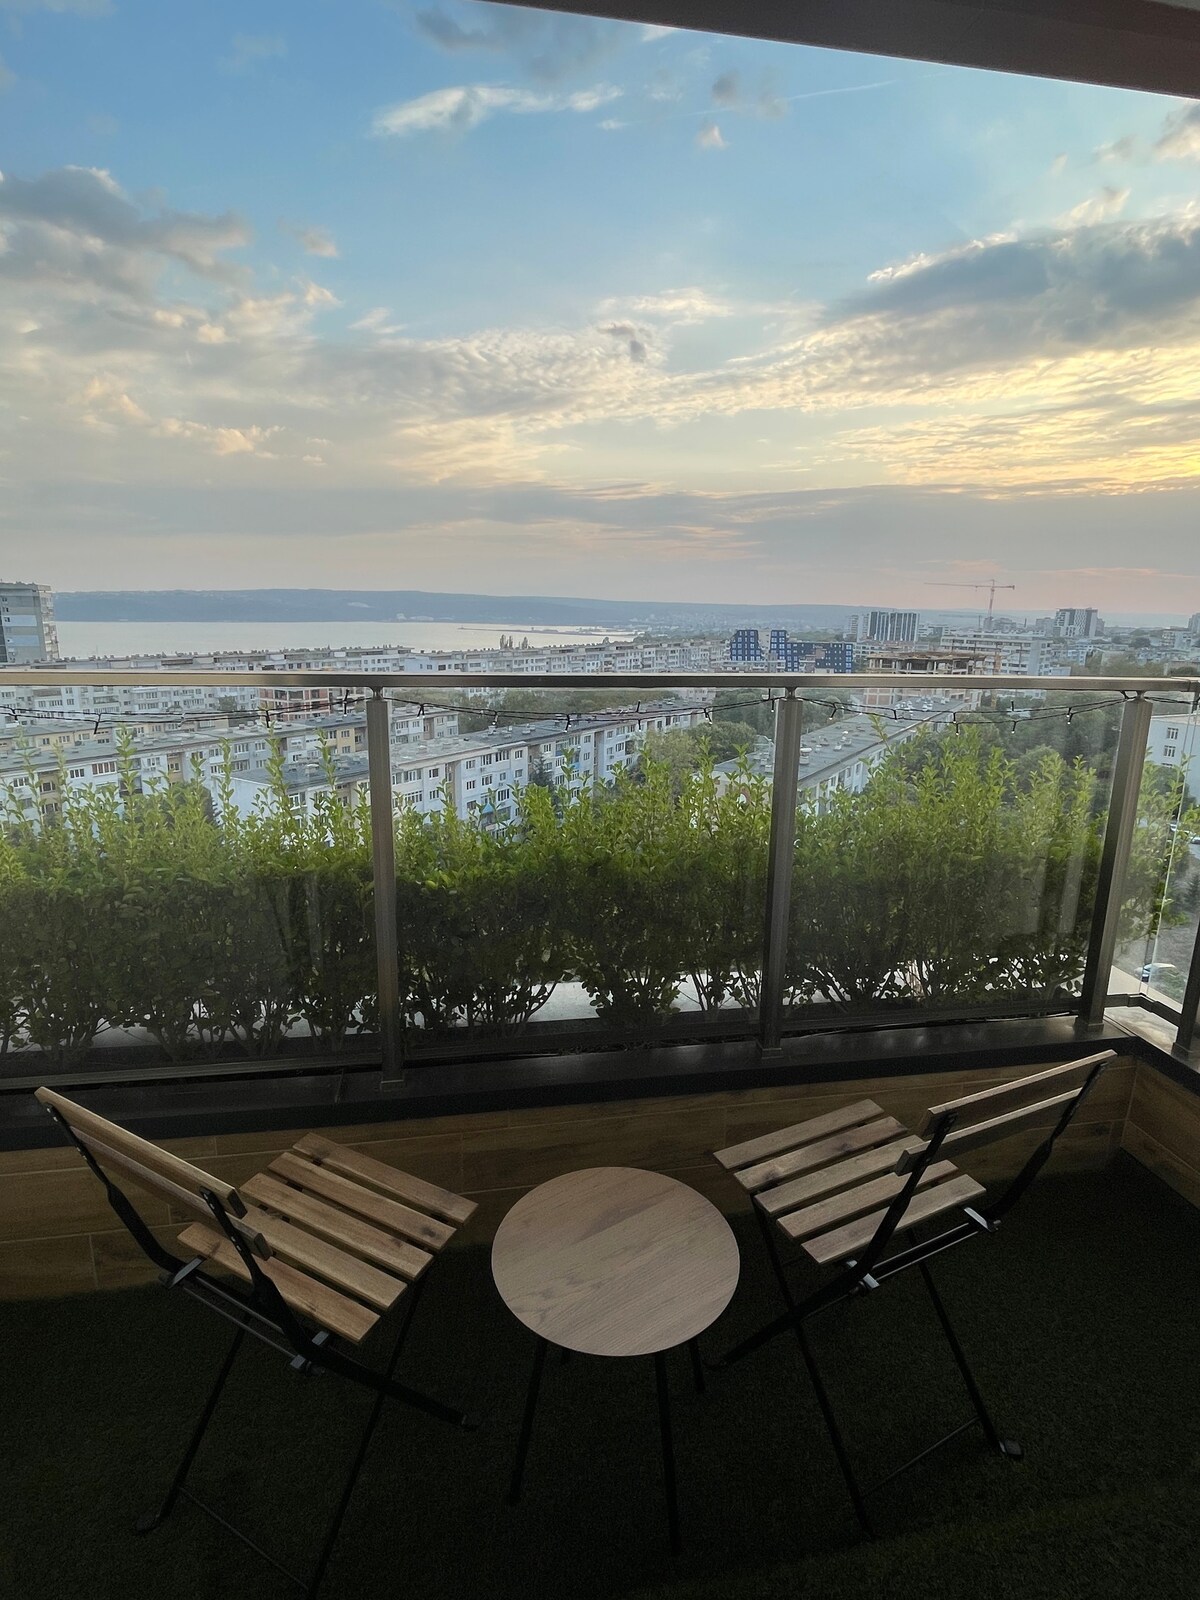 MG sea view apartment